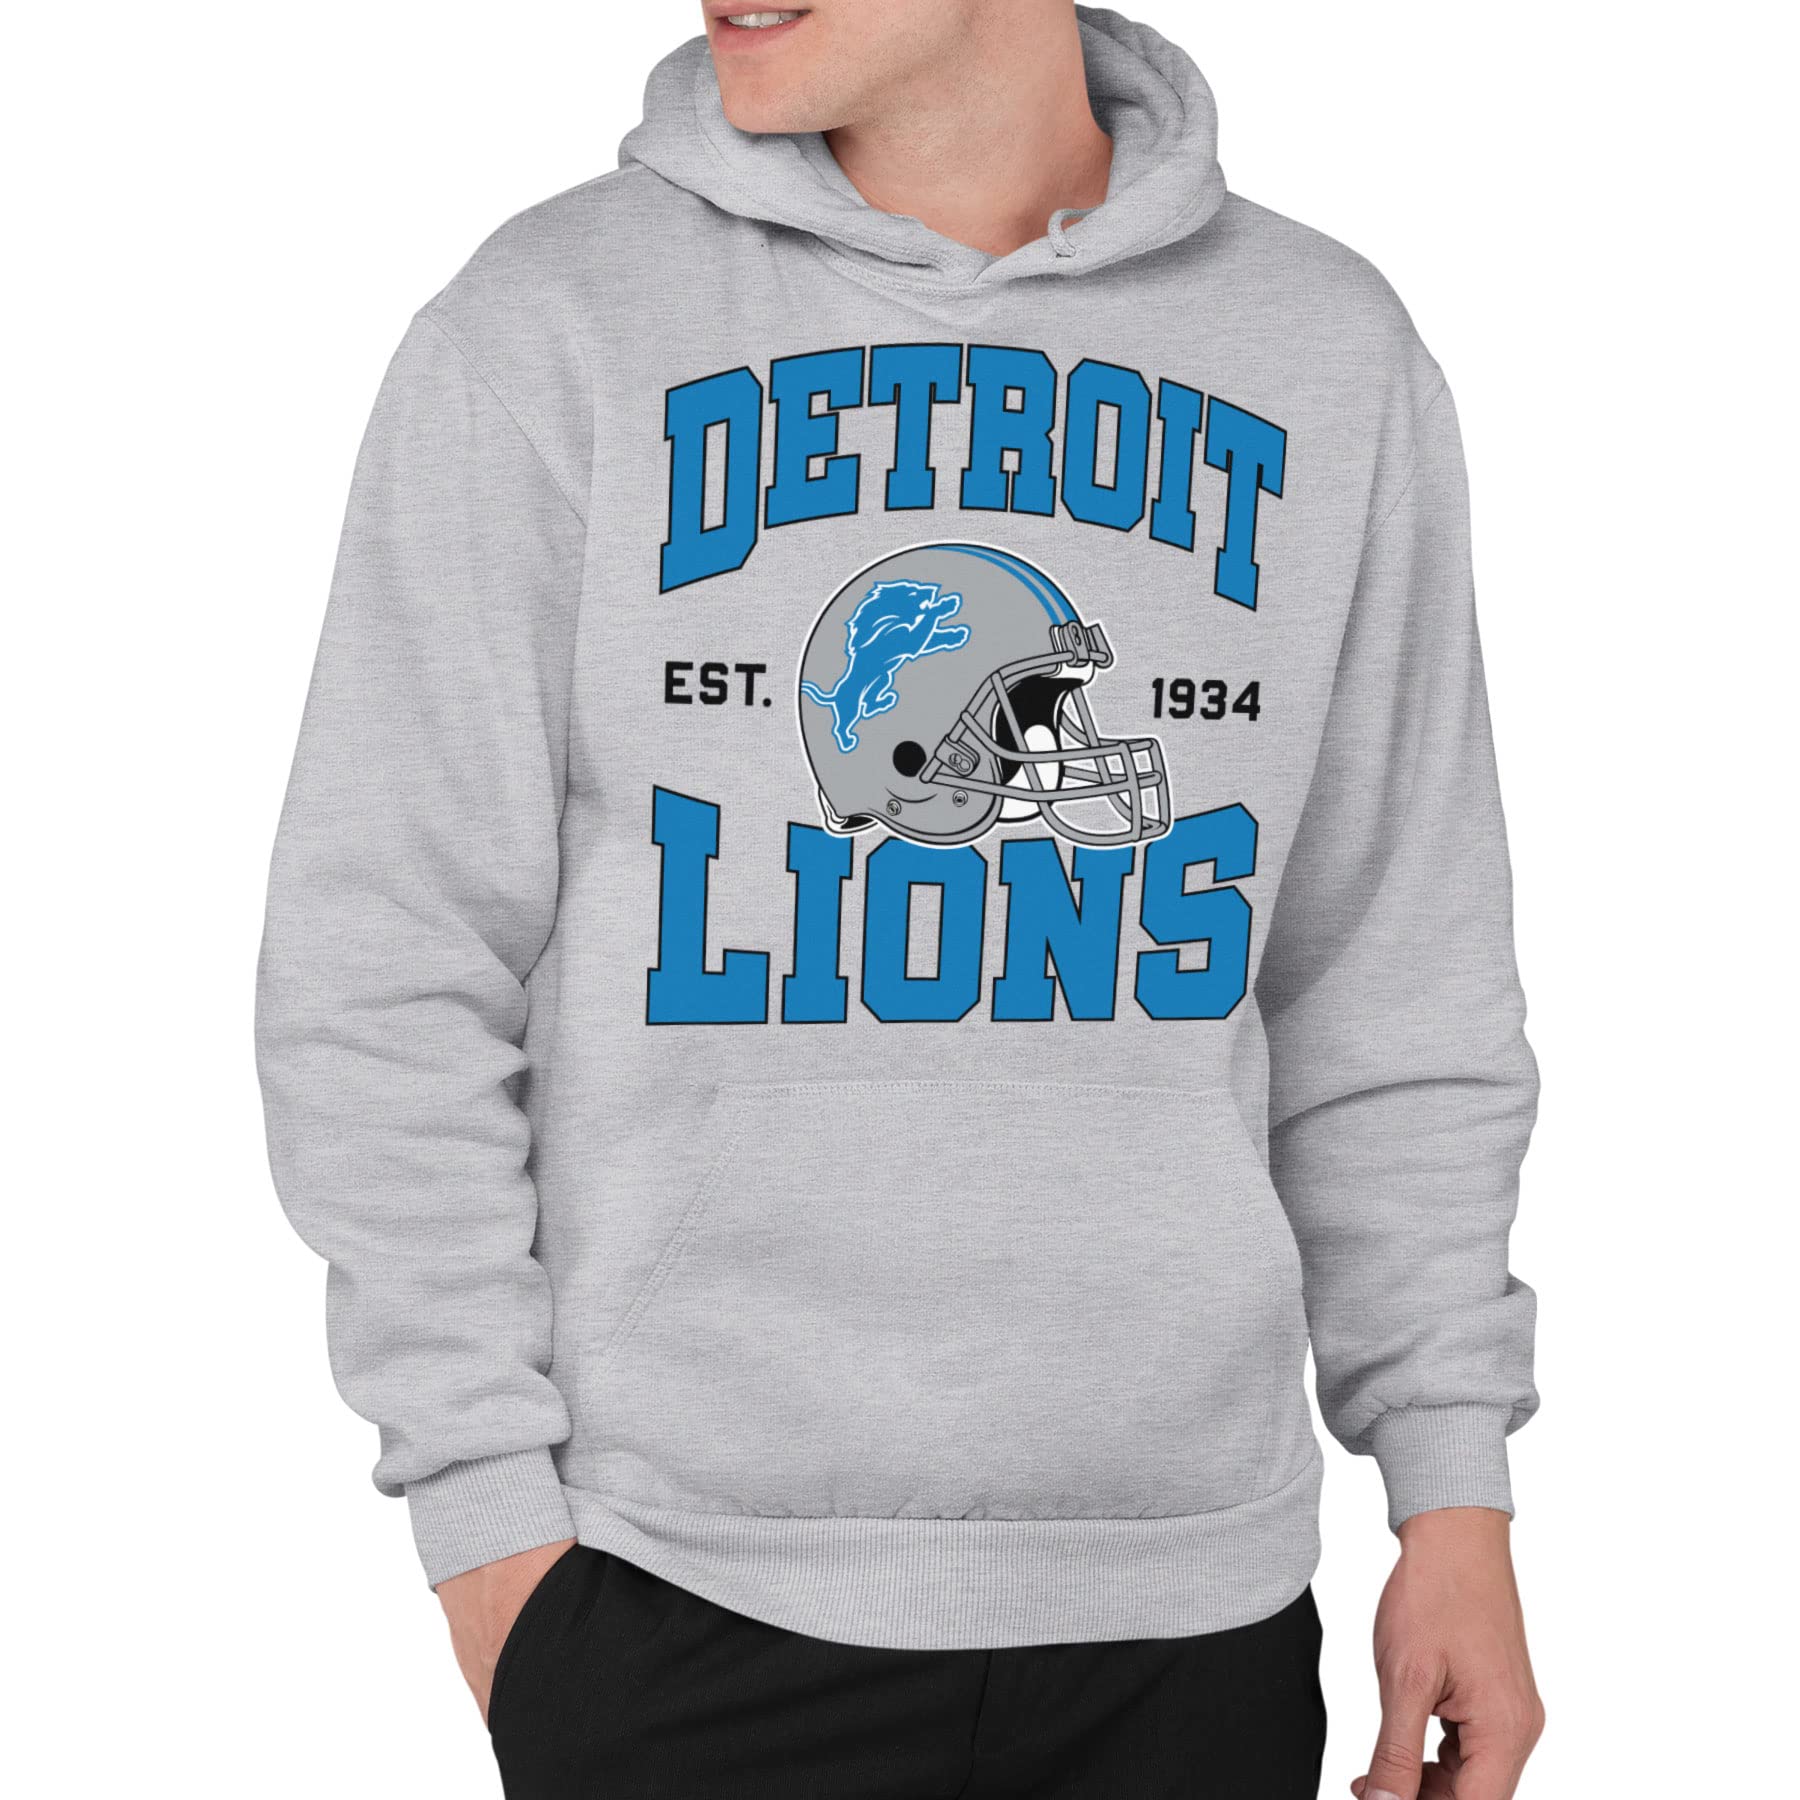 retro lions sweatshirt